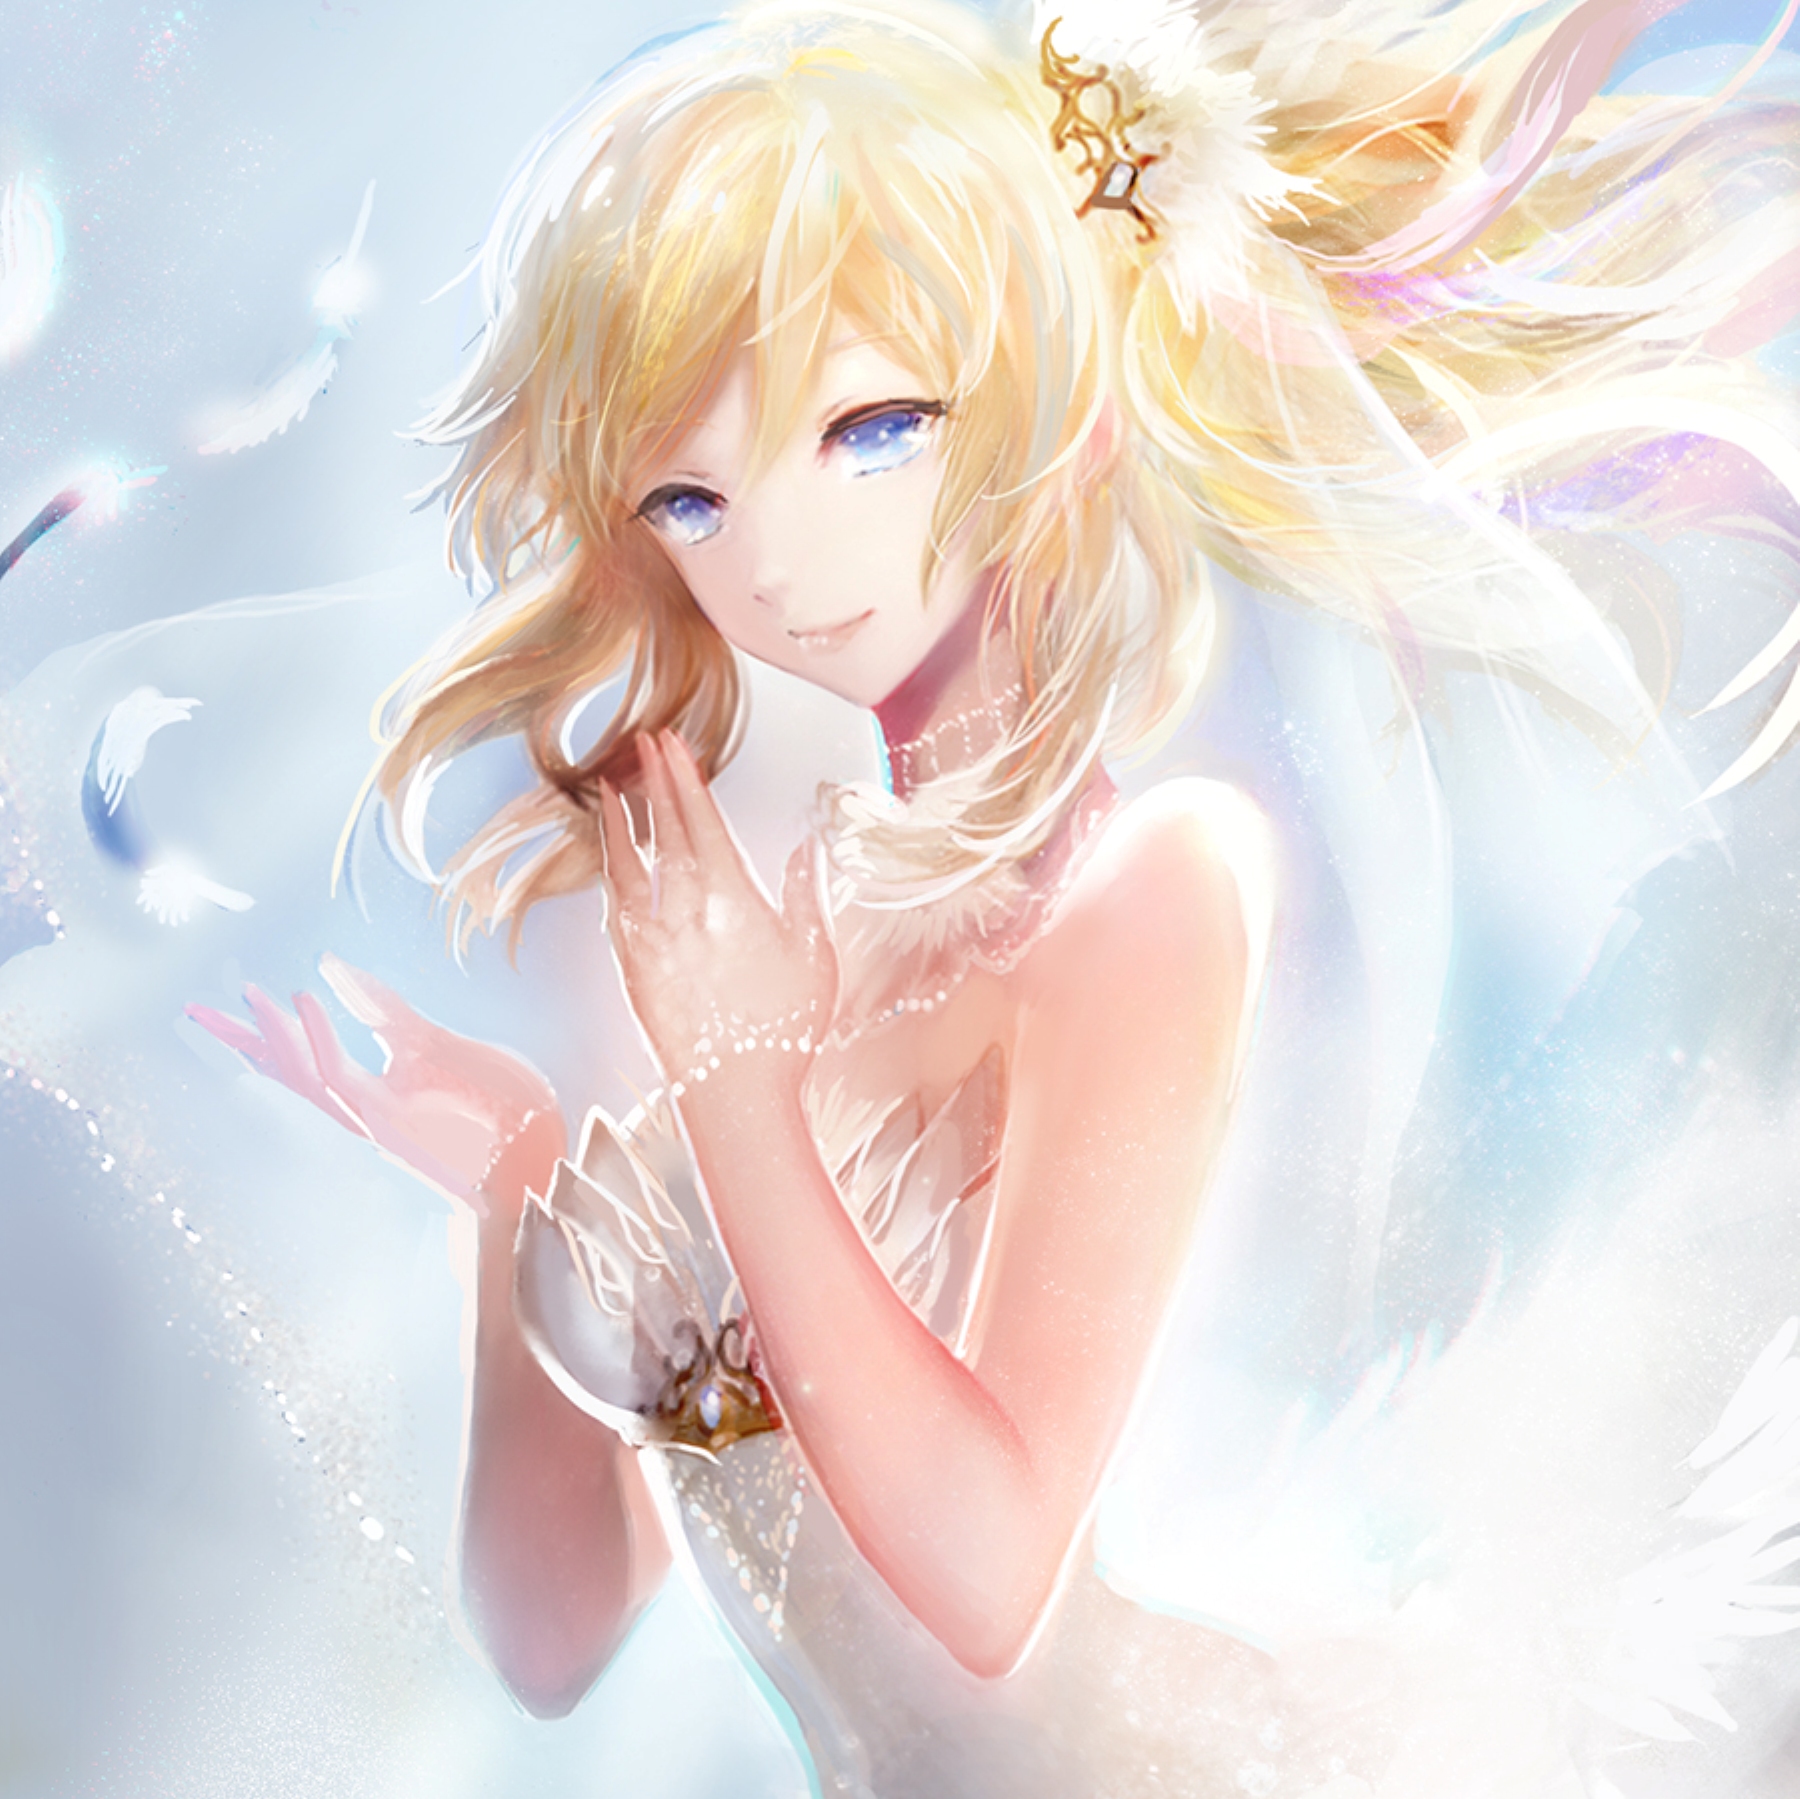 white-swan-blond-blonde-hair-anime-sweet-9mbp (1).jpg